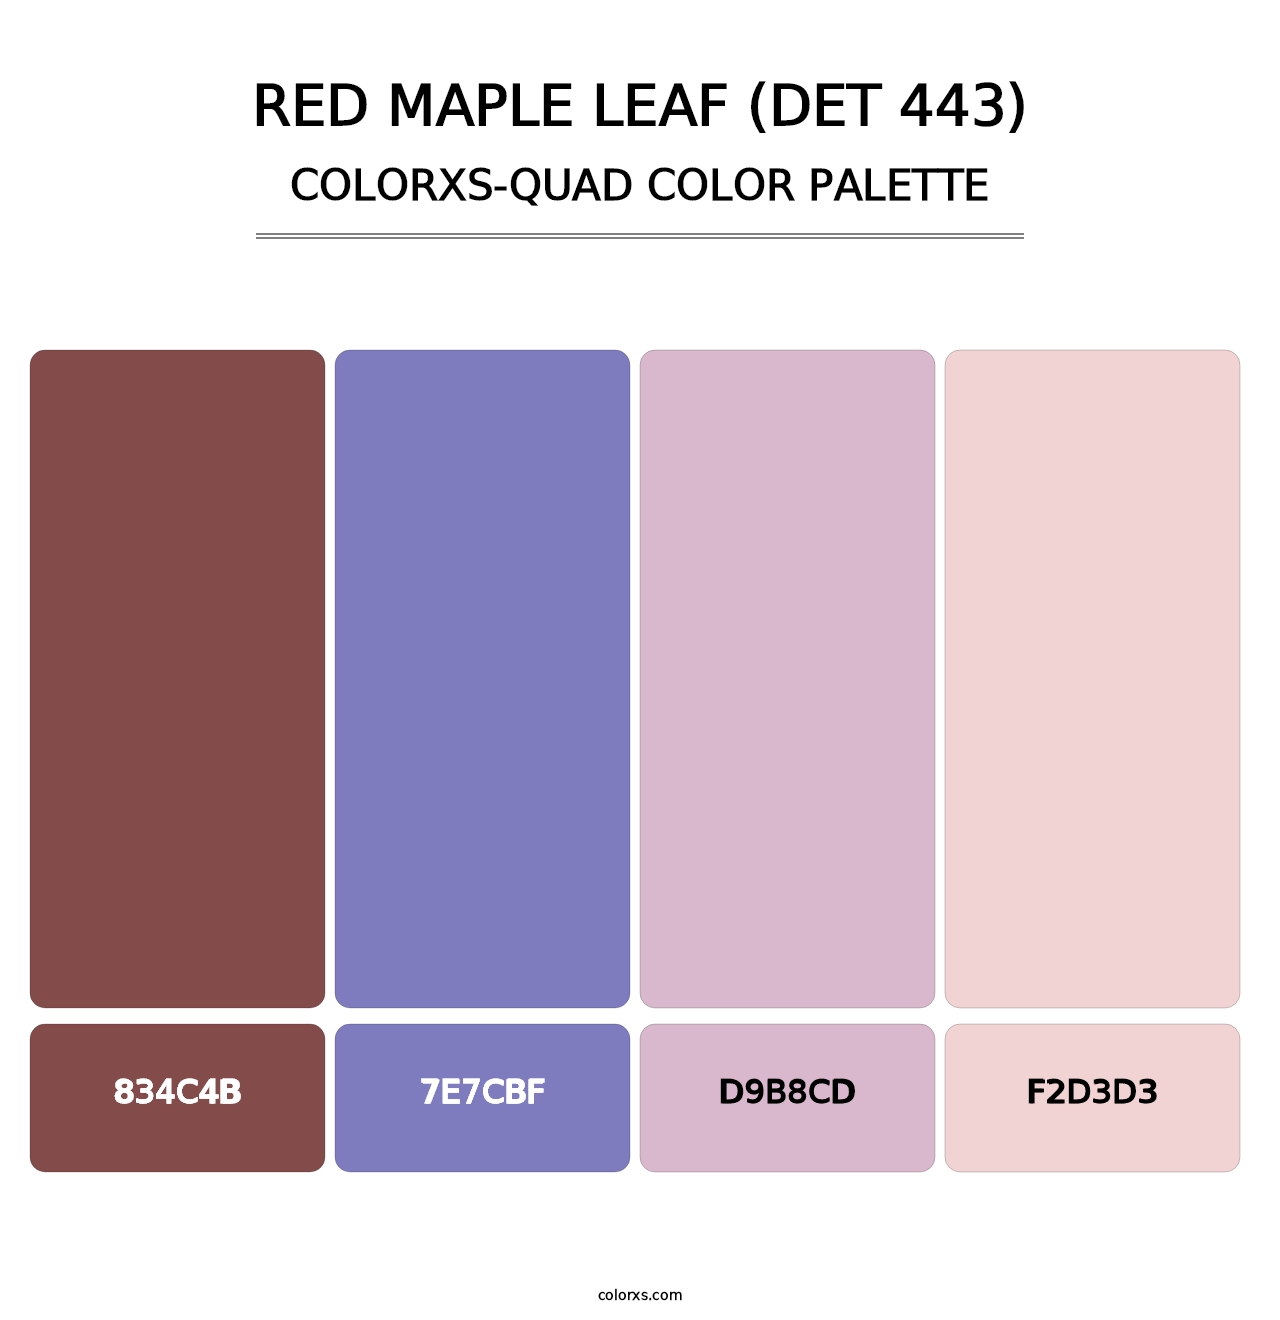 Red Maple Leaf (DET 443) - Colorxs Quad Palette